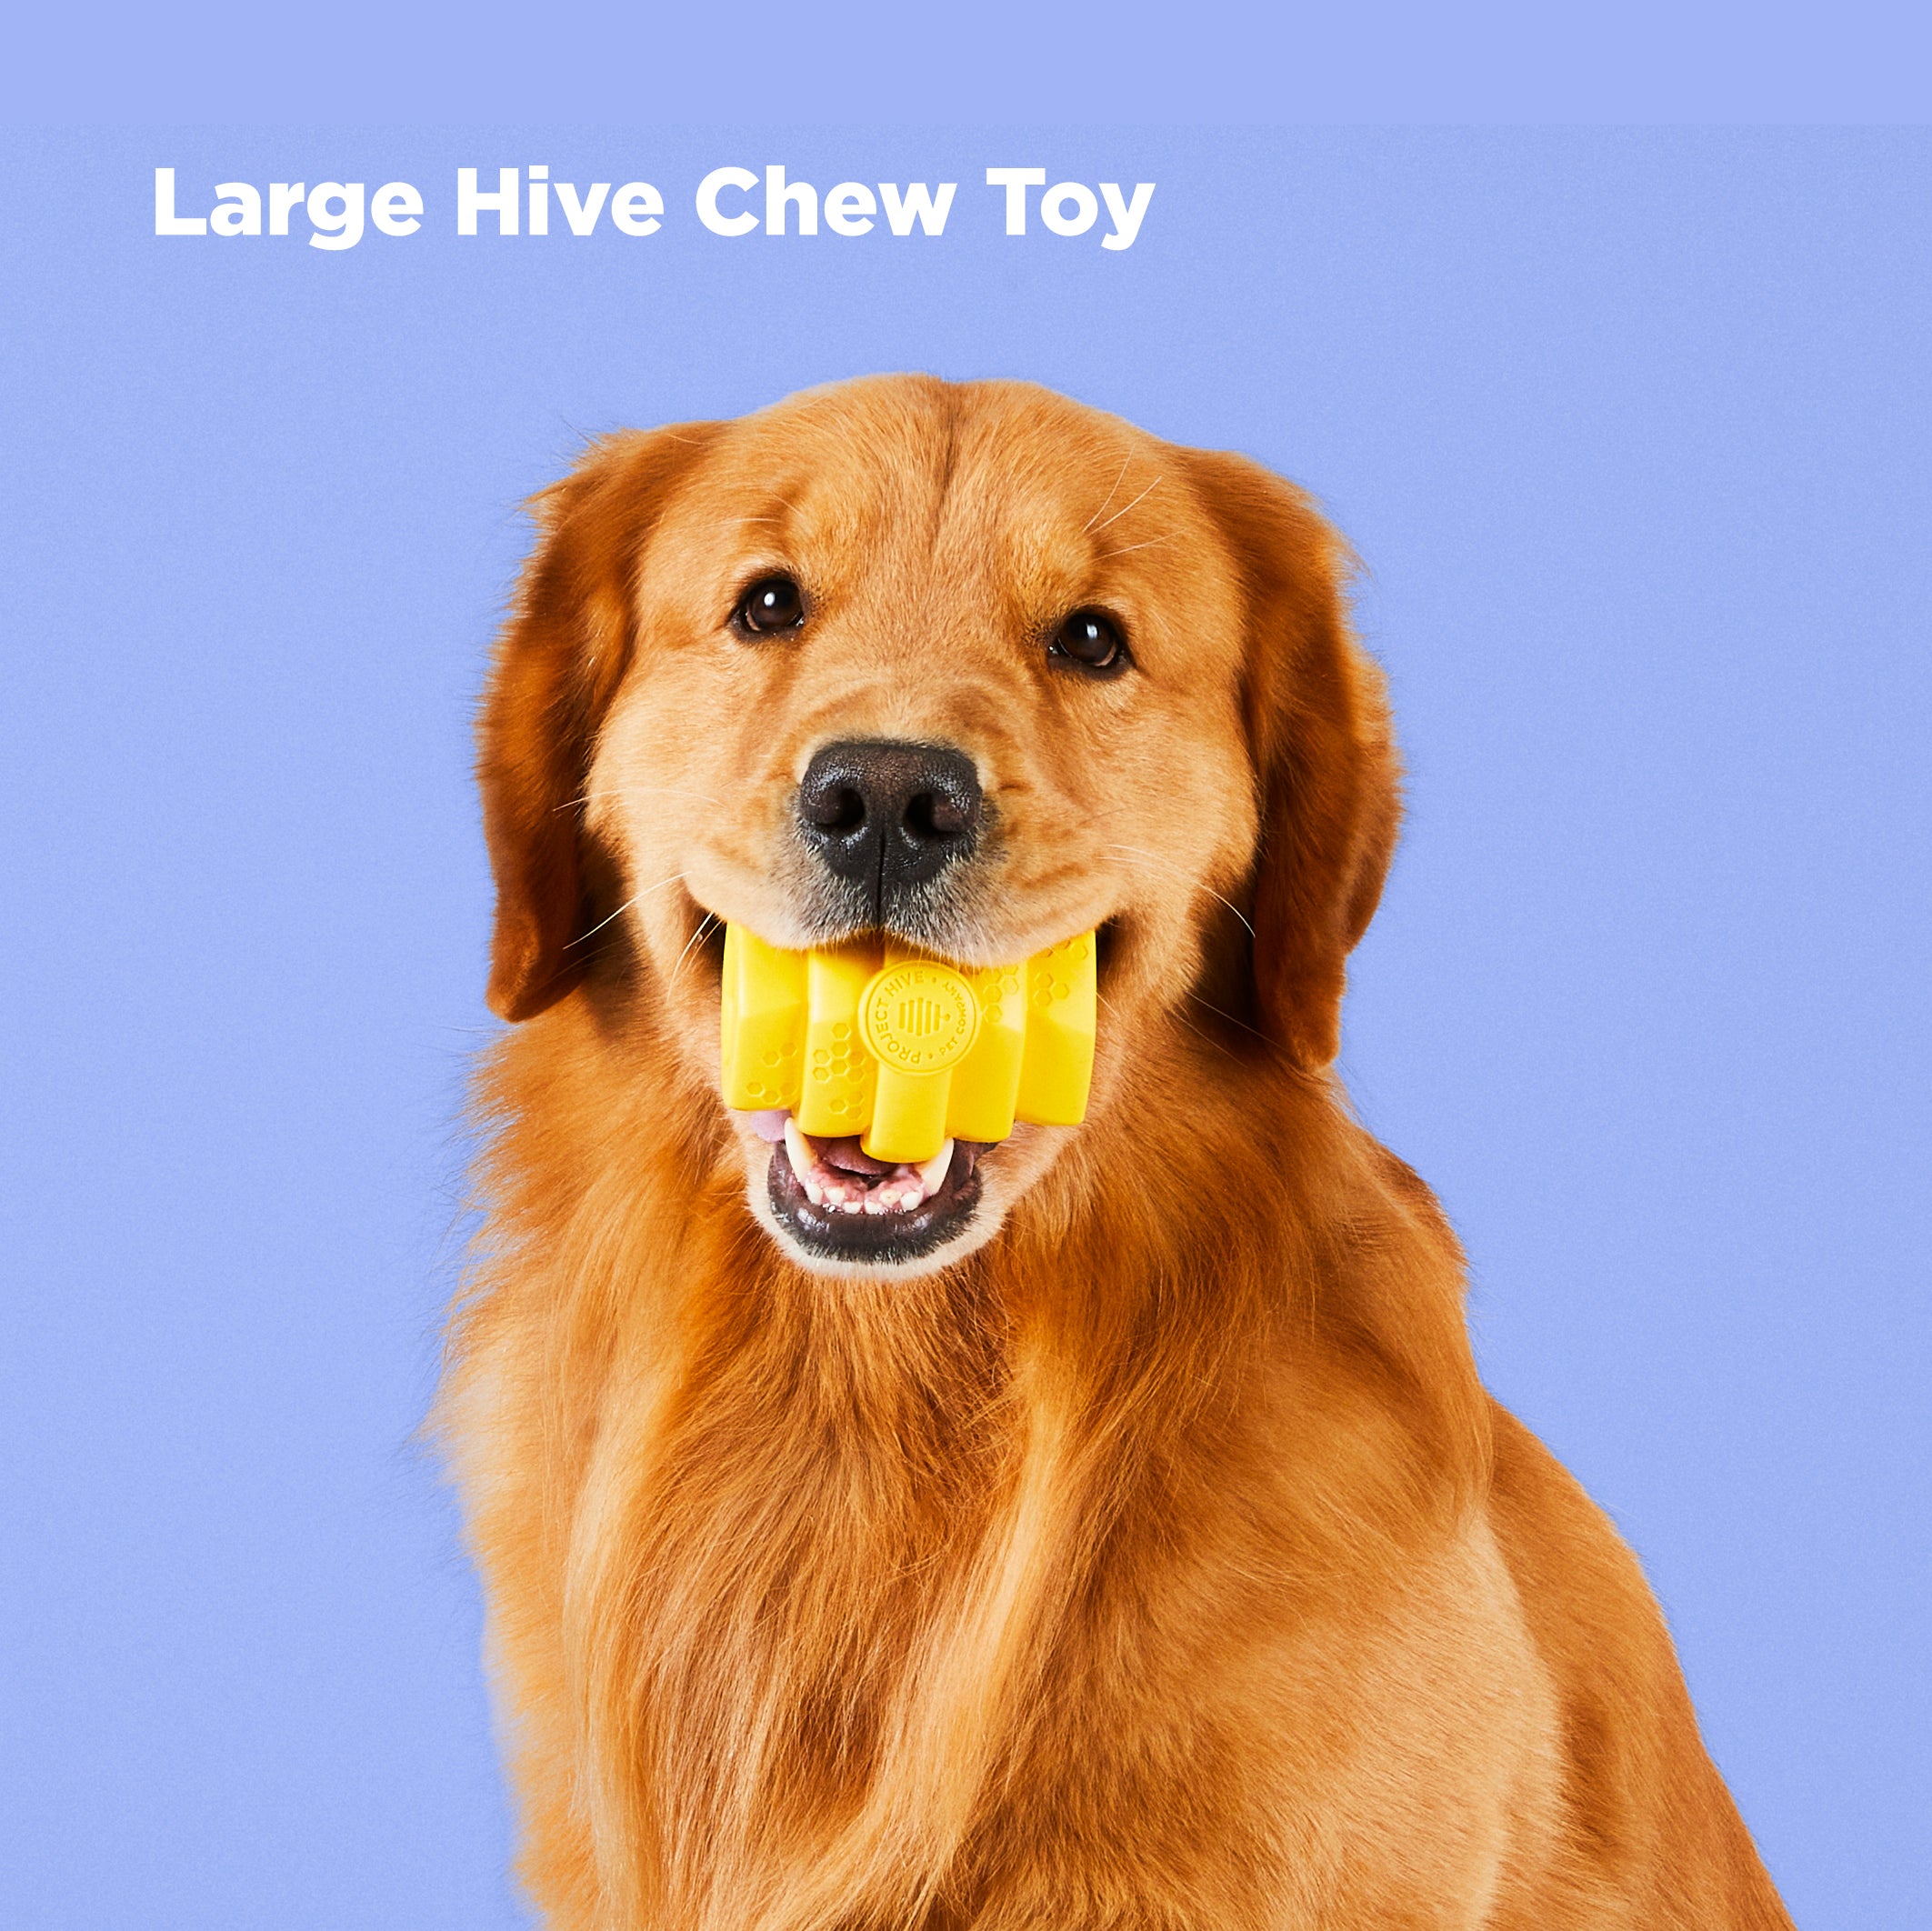 Interactive Dog Toys & Treats Bundle for Medium/Large Dogs